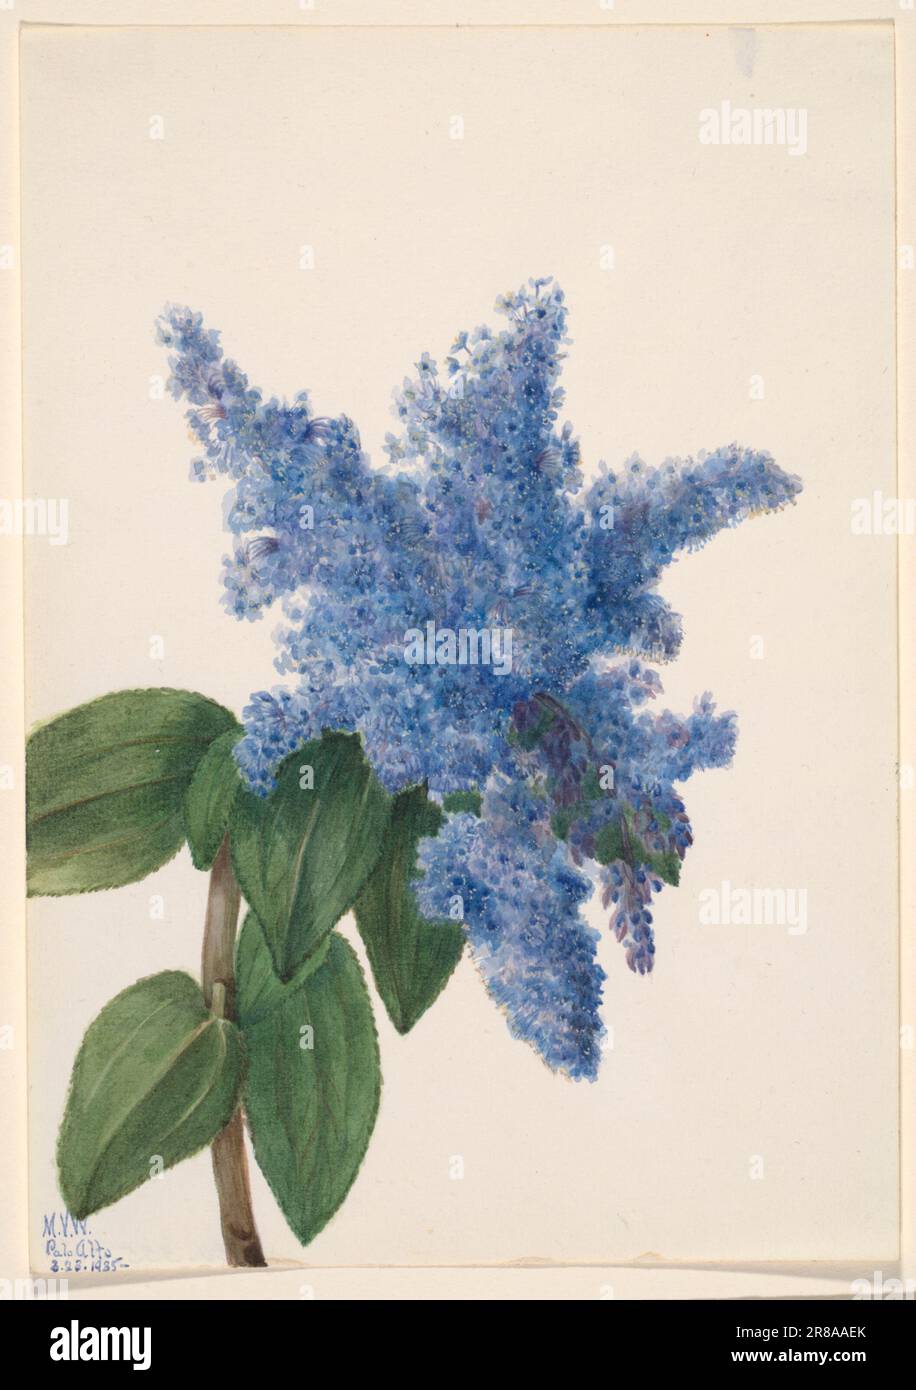 California Lilac (Ceanothus thyrsiflorus) 1935 by Mary Vaux Walcott, born Philadelphia, PA 1860-died St. Andrews, New Brunswick, Canada 1940 Stock Photo